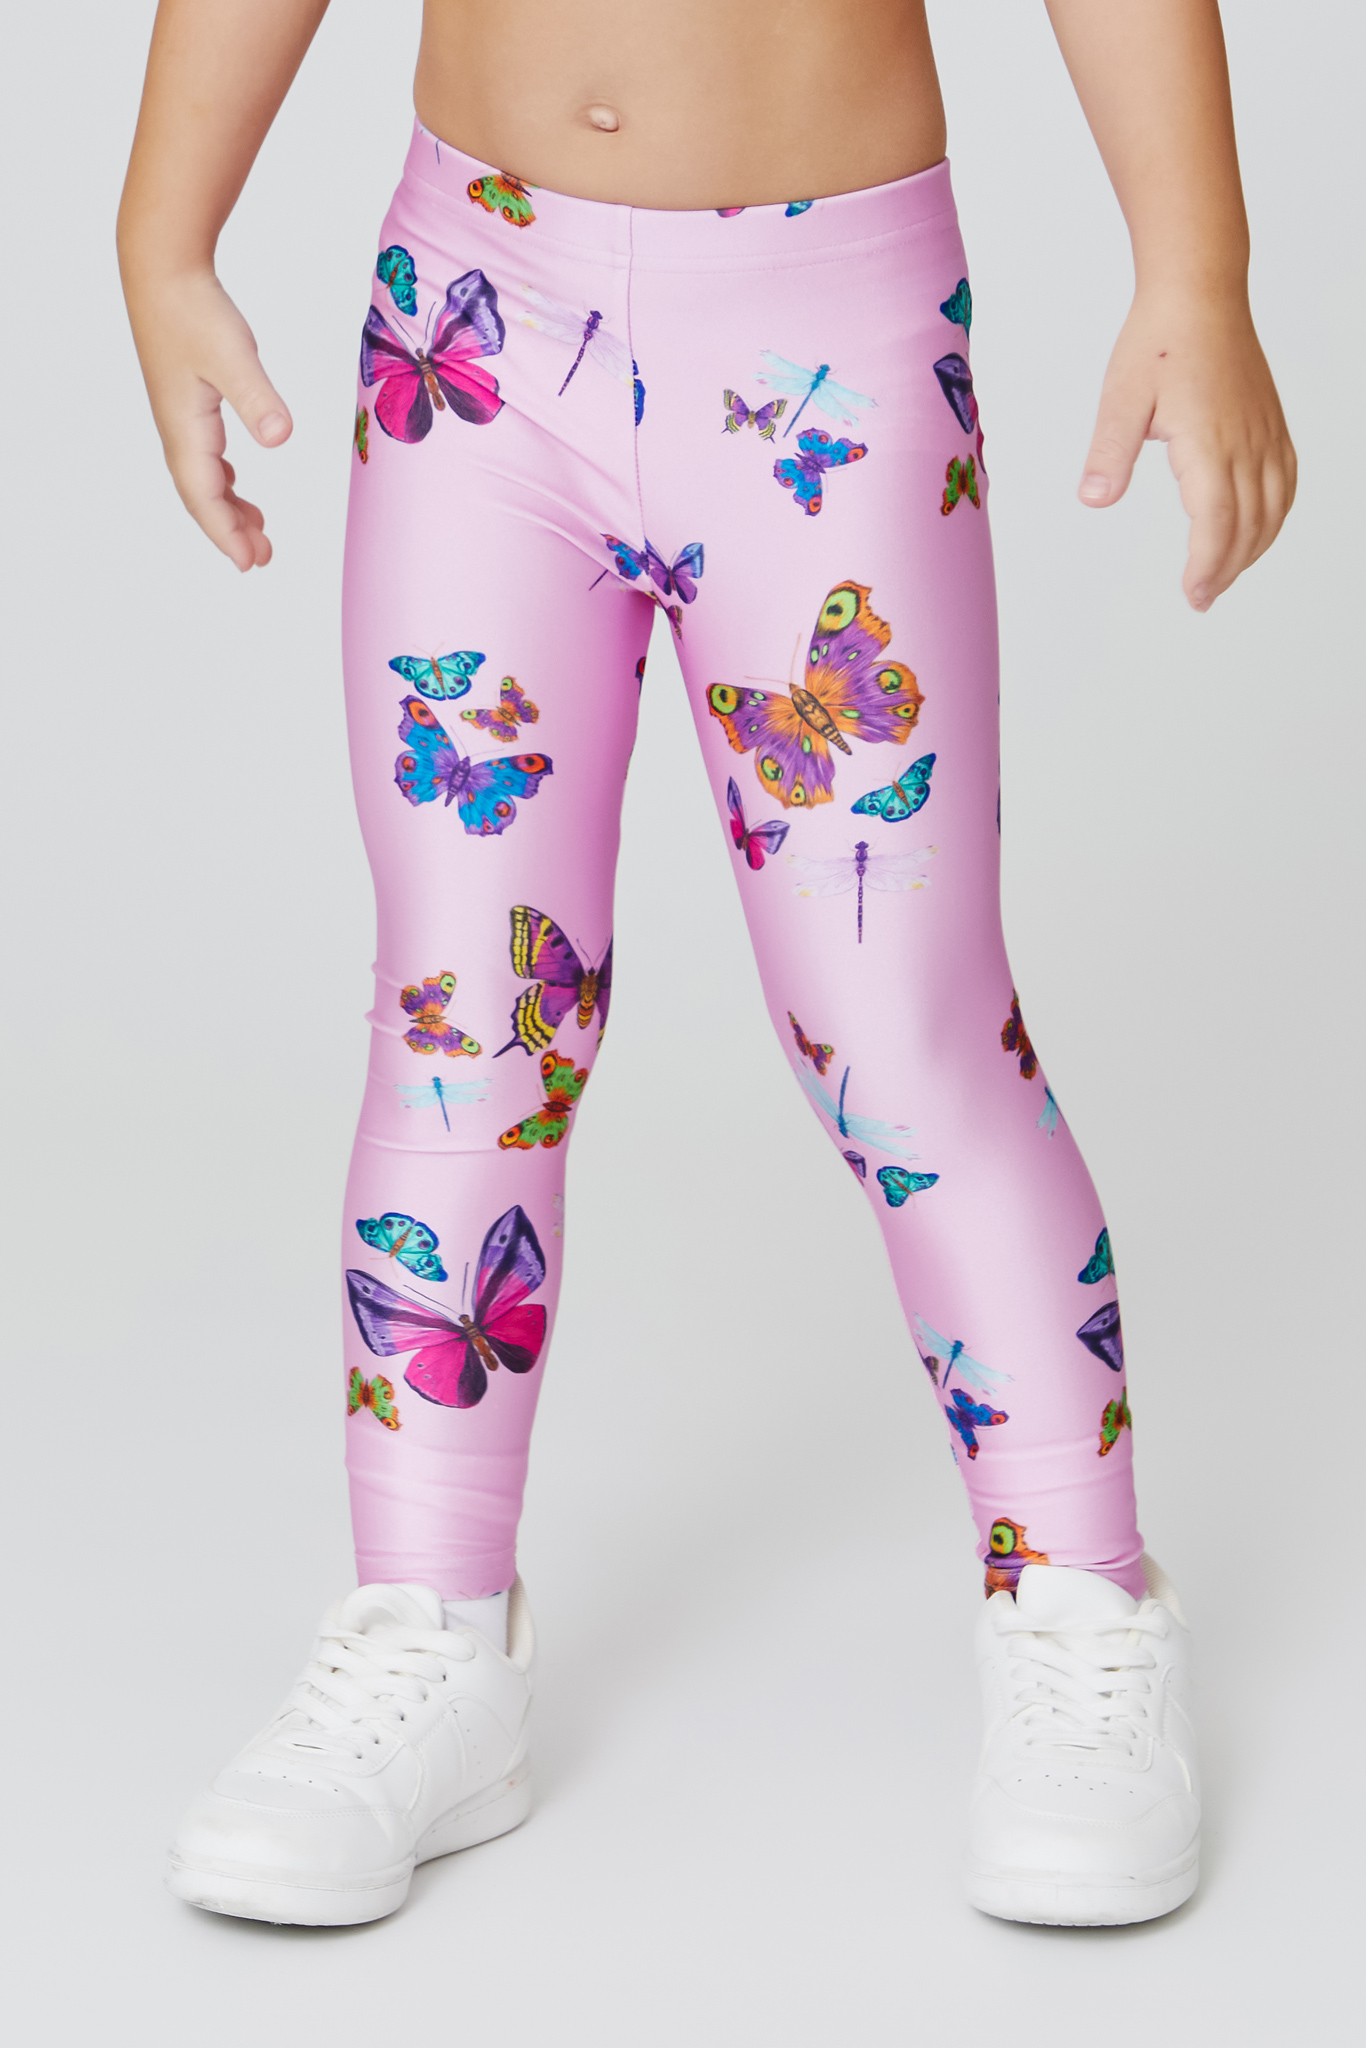 Toddler Leggings in Pink Neon Butterflies